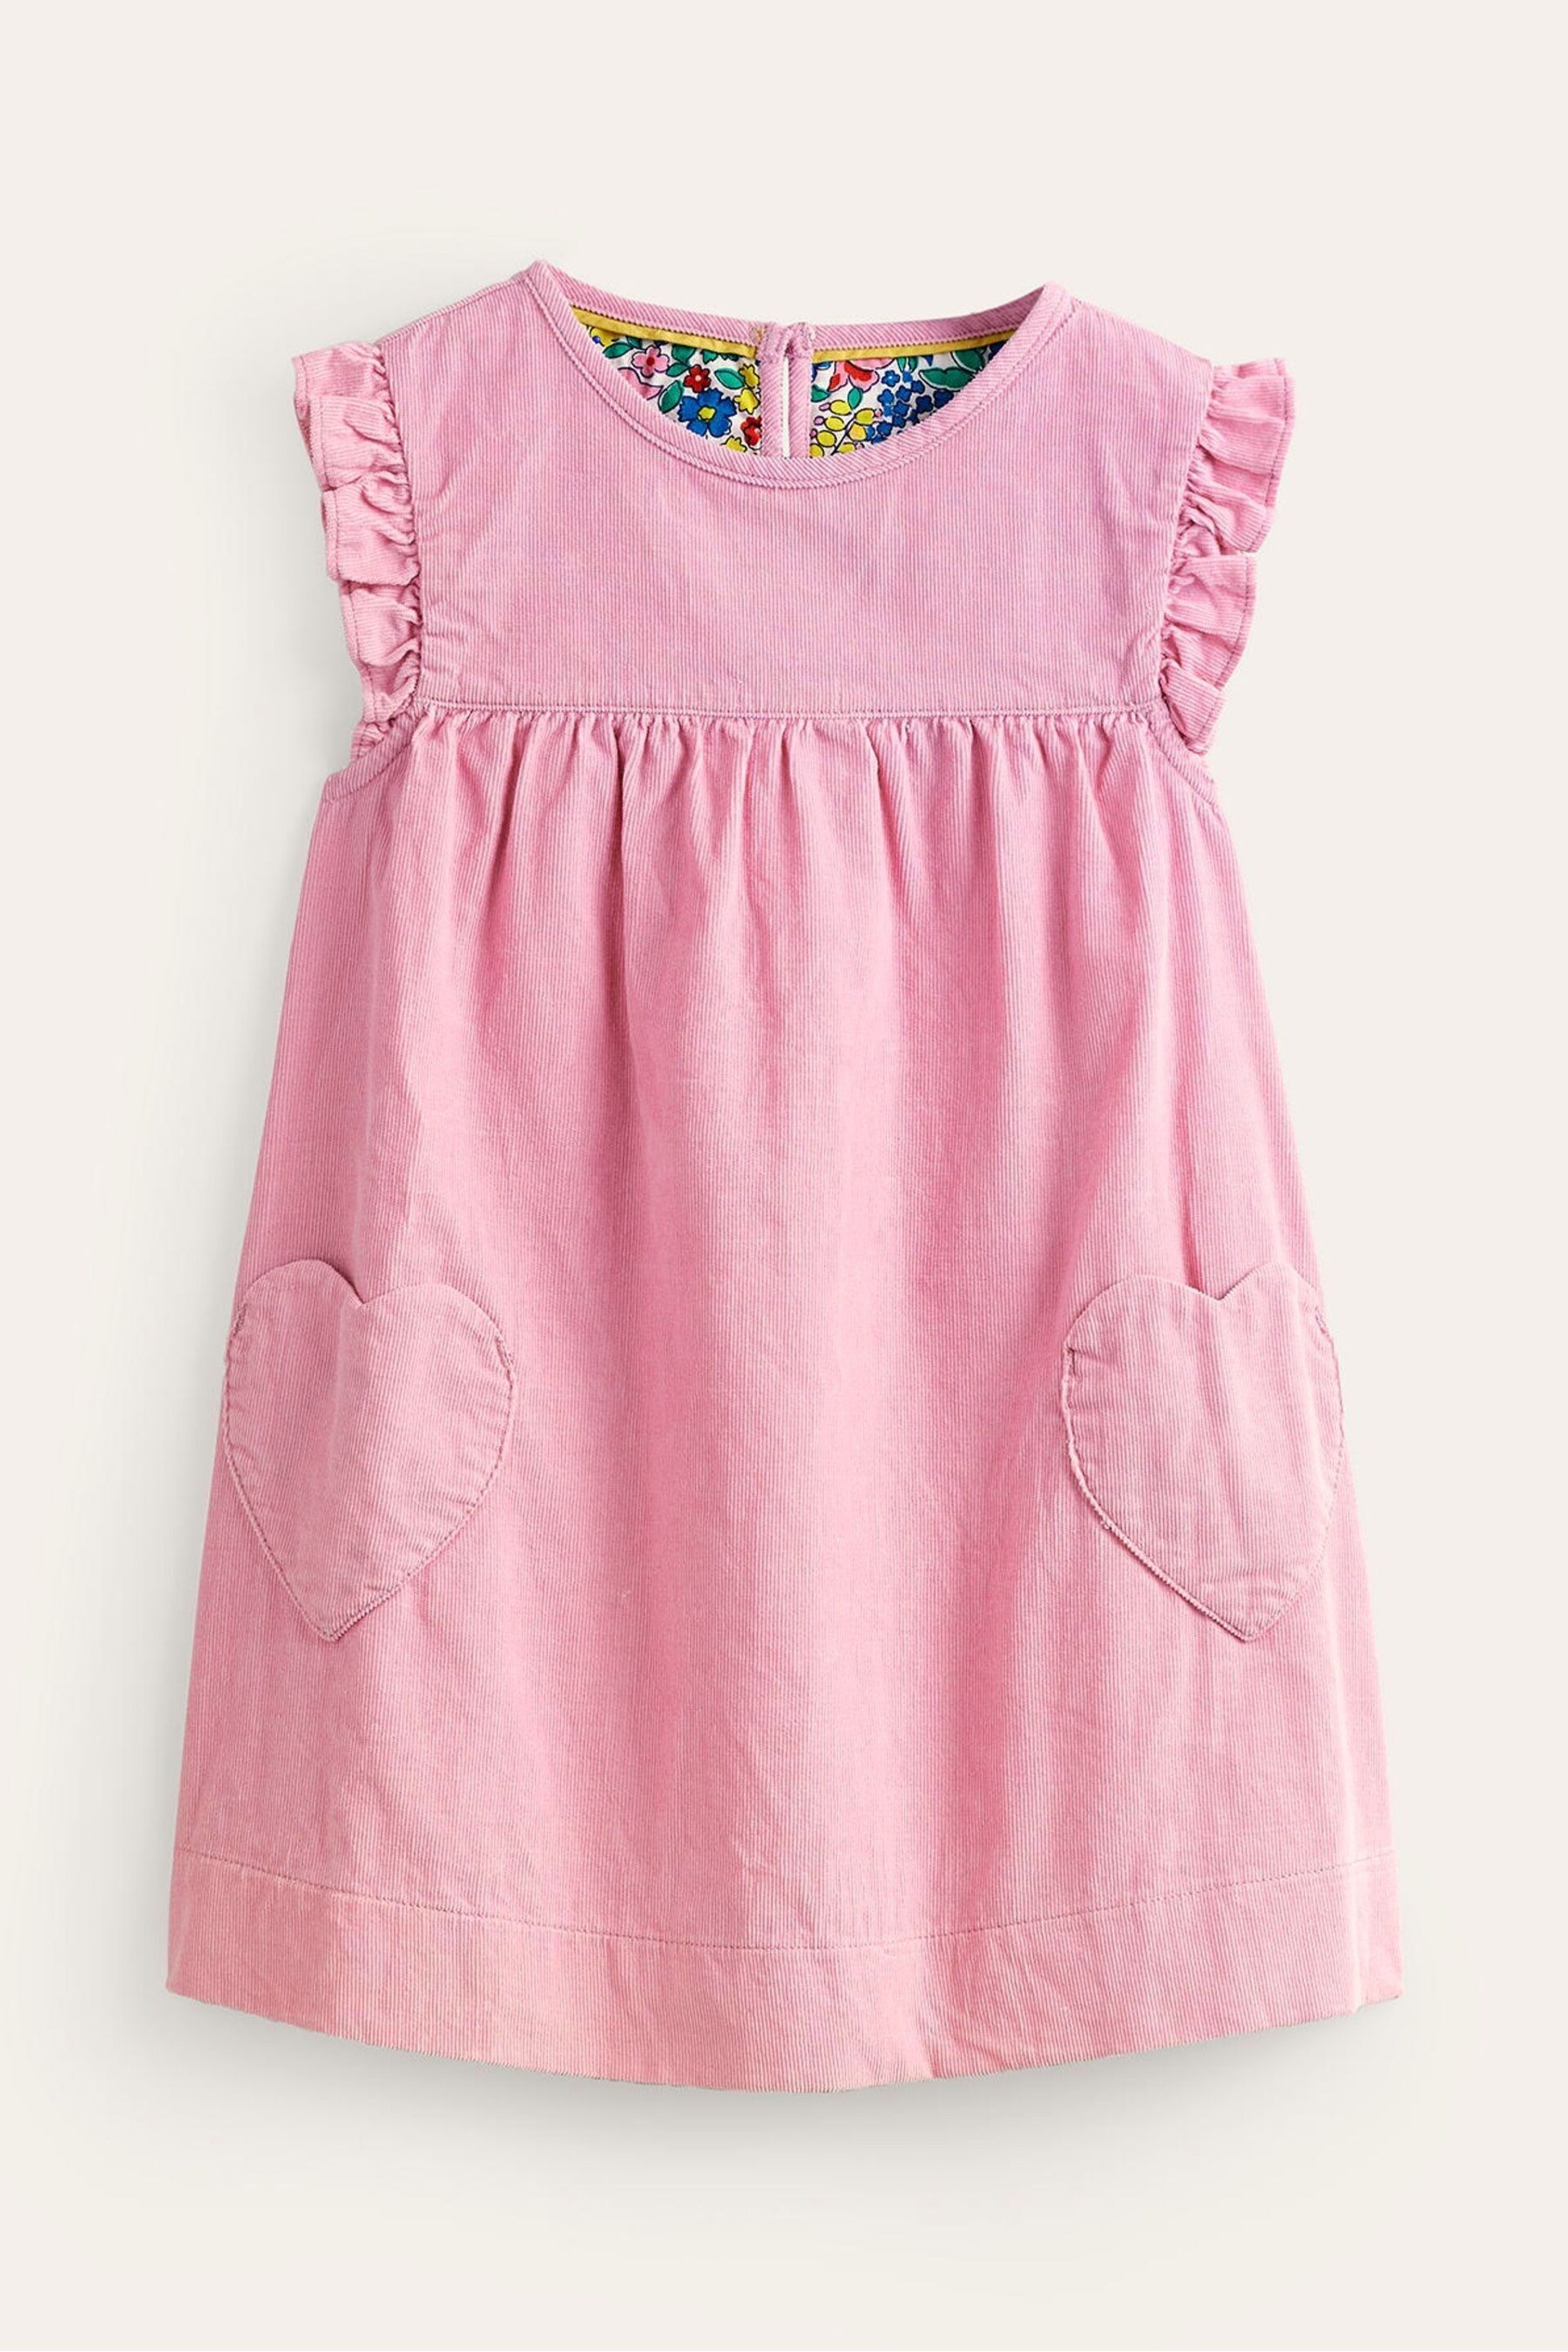 Boden Pink Woven Heart Pocket Dresses - Image 1 of 3